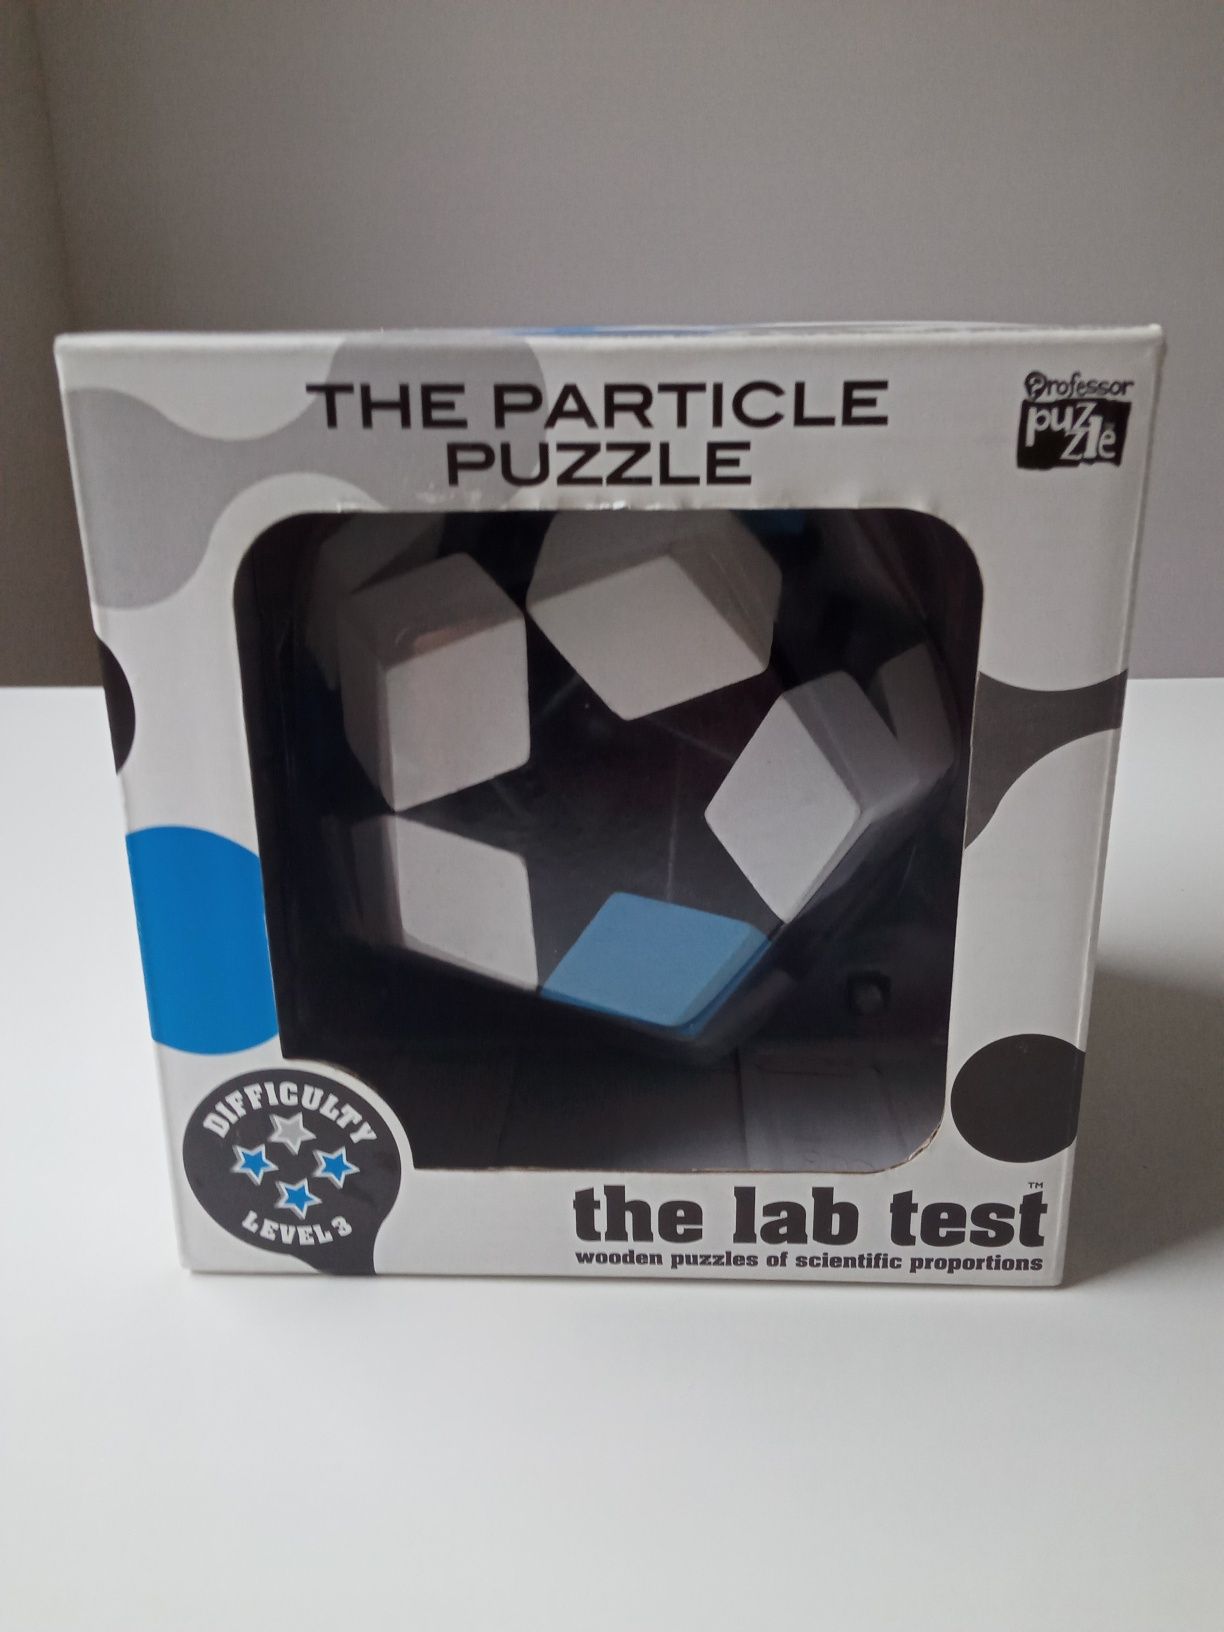 Łamigłówka puzzle przestrzenne - The Particle Puzzle, The lab test